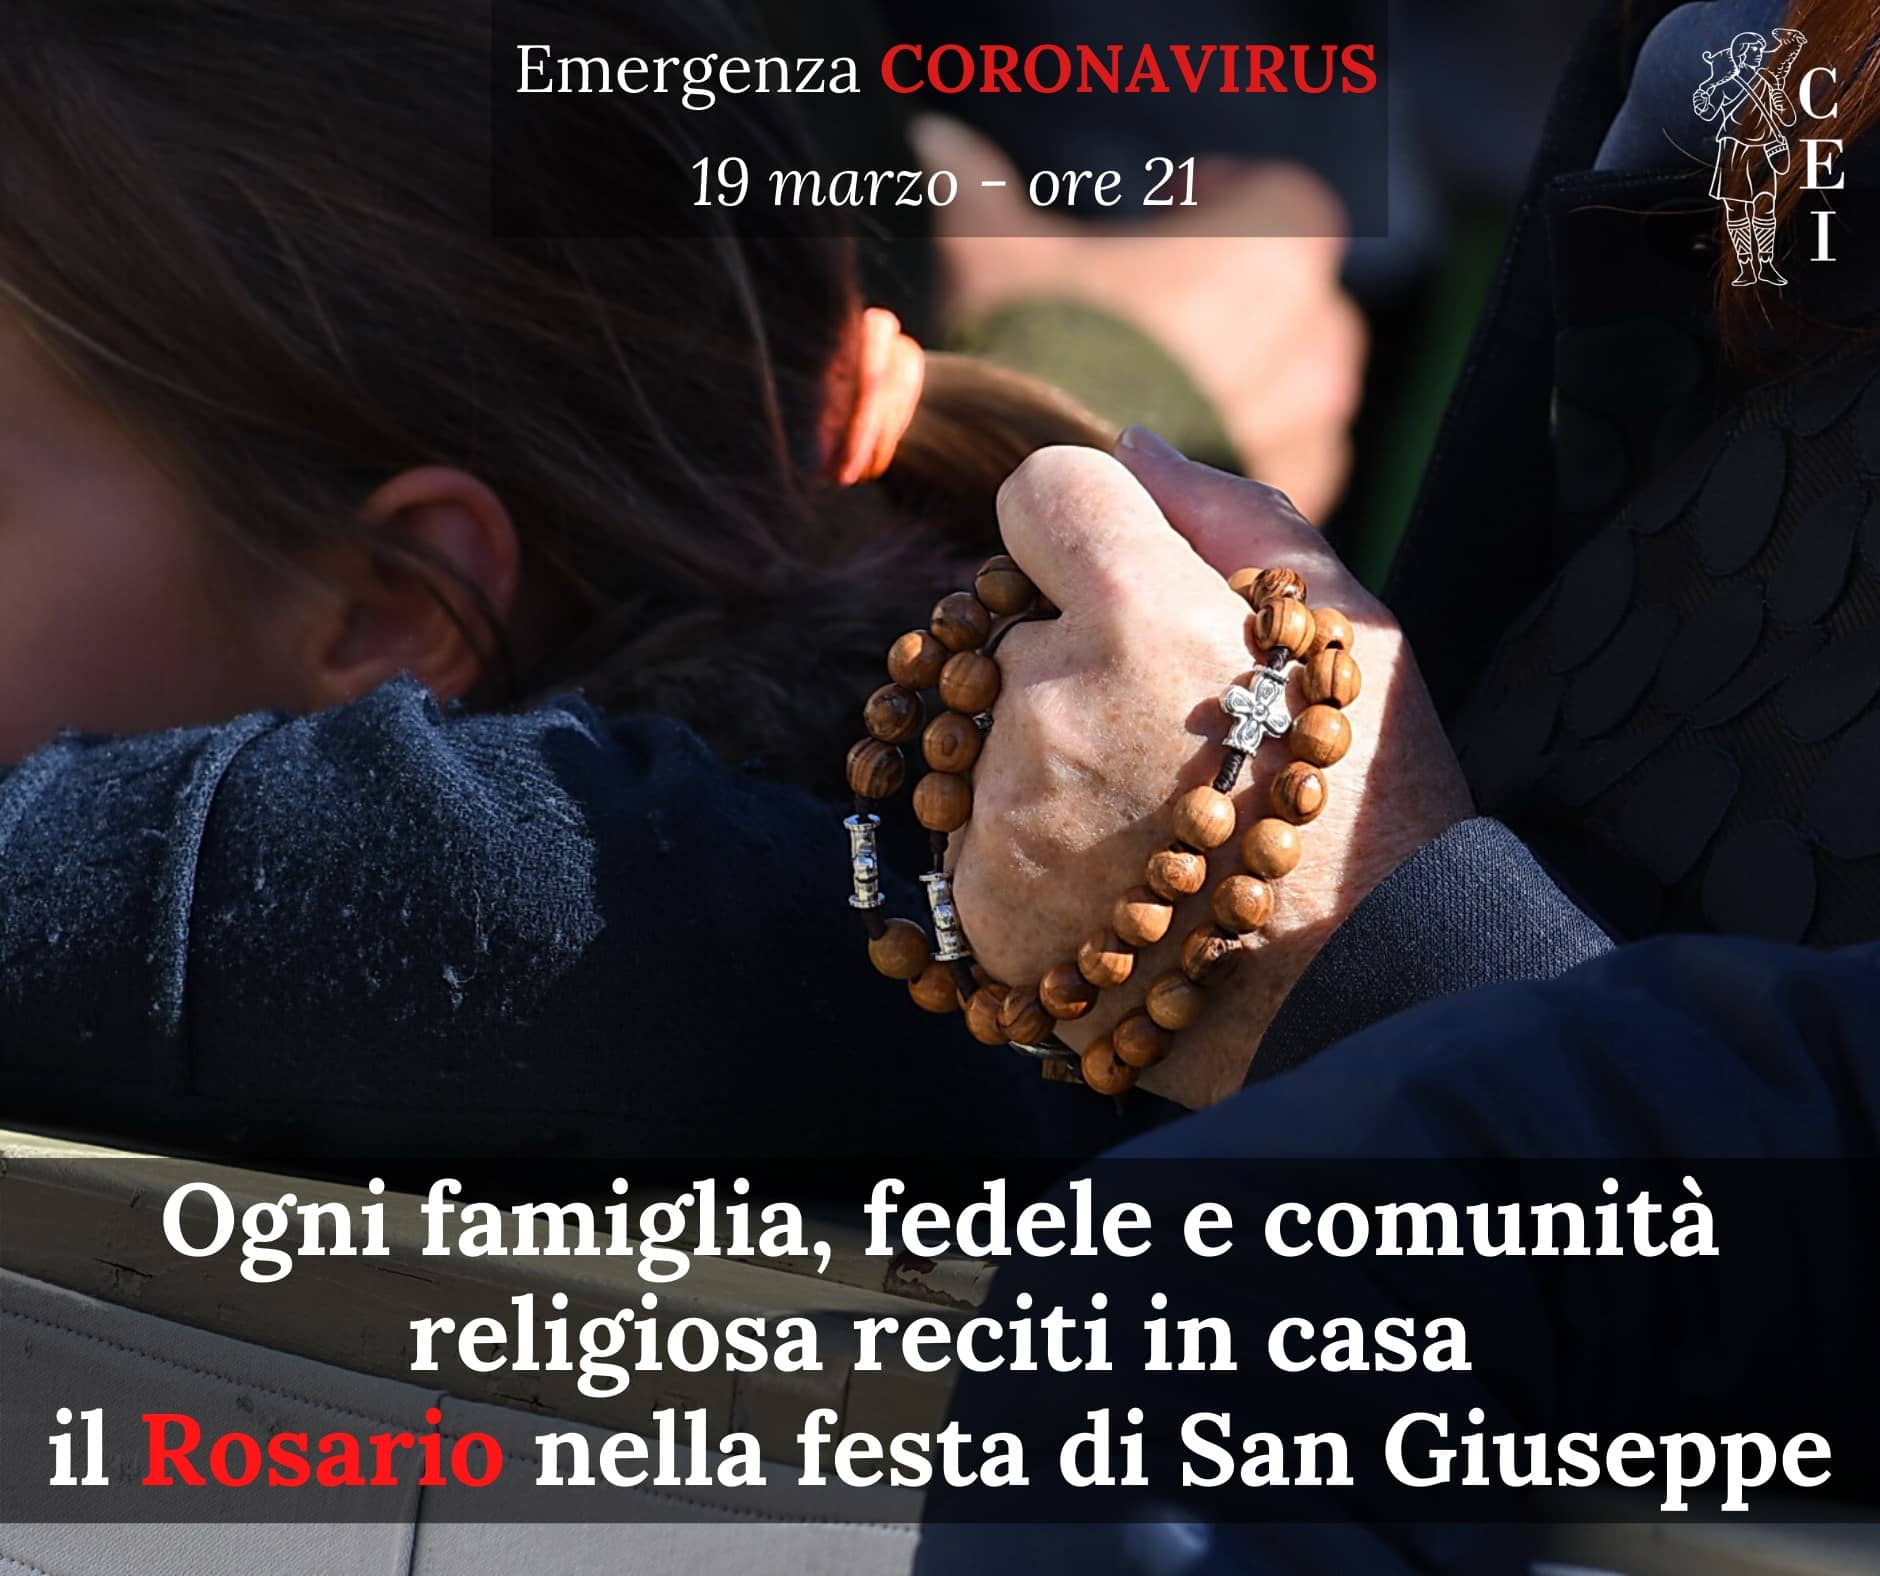 Emergenza Coronavirus - Rosario 19 marzo ore 21